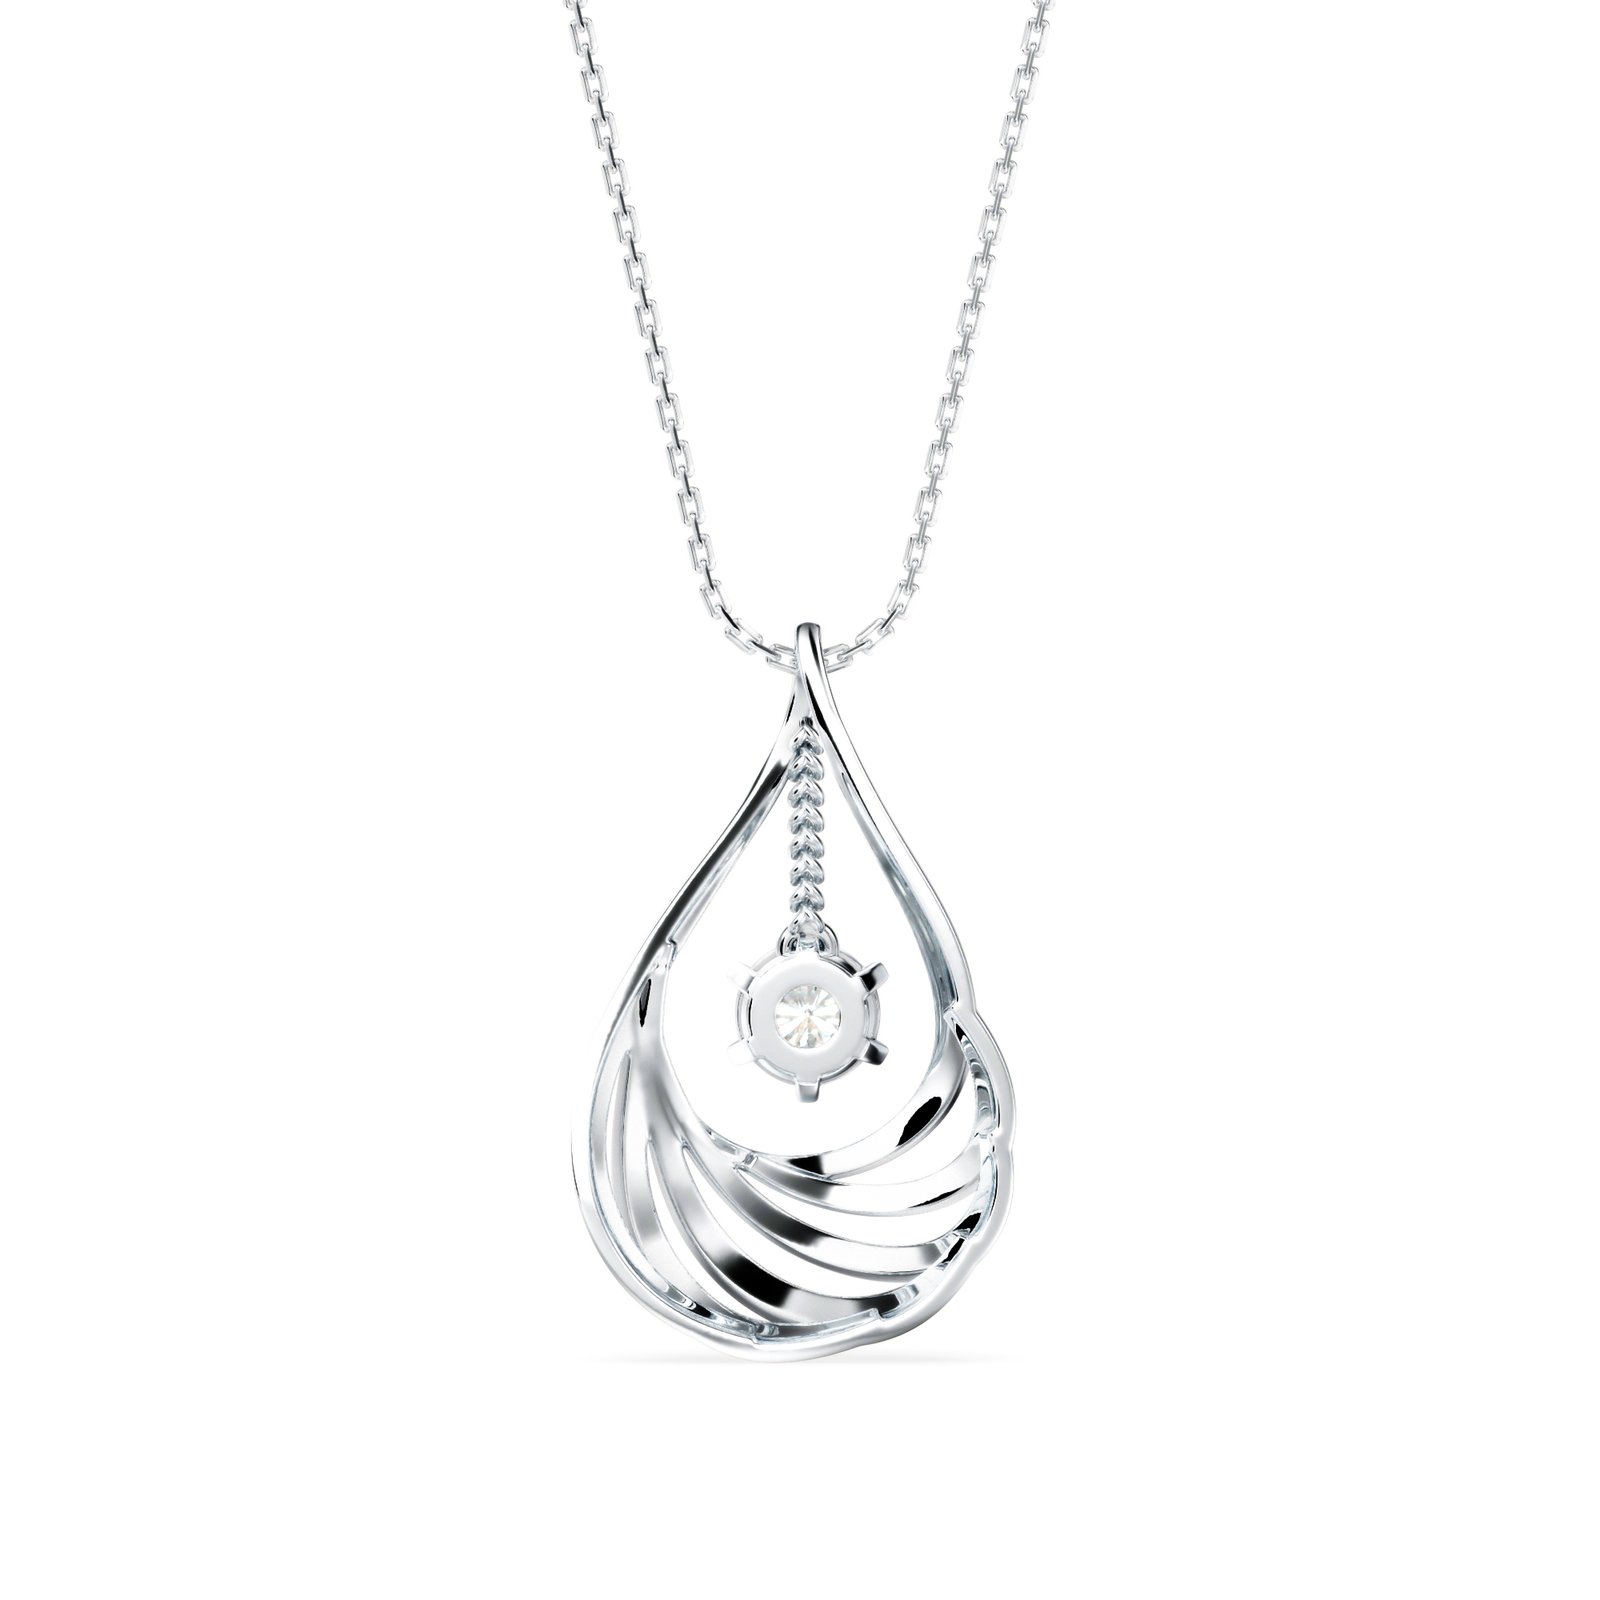 Pendulum Diamond Pendant In Pure Gold By Dhanji Jewels